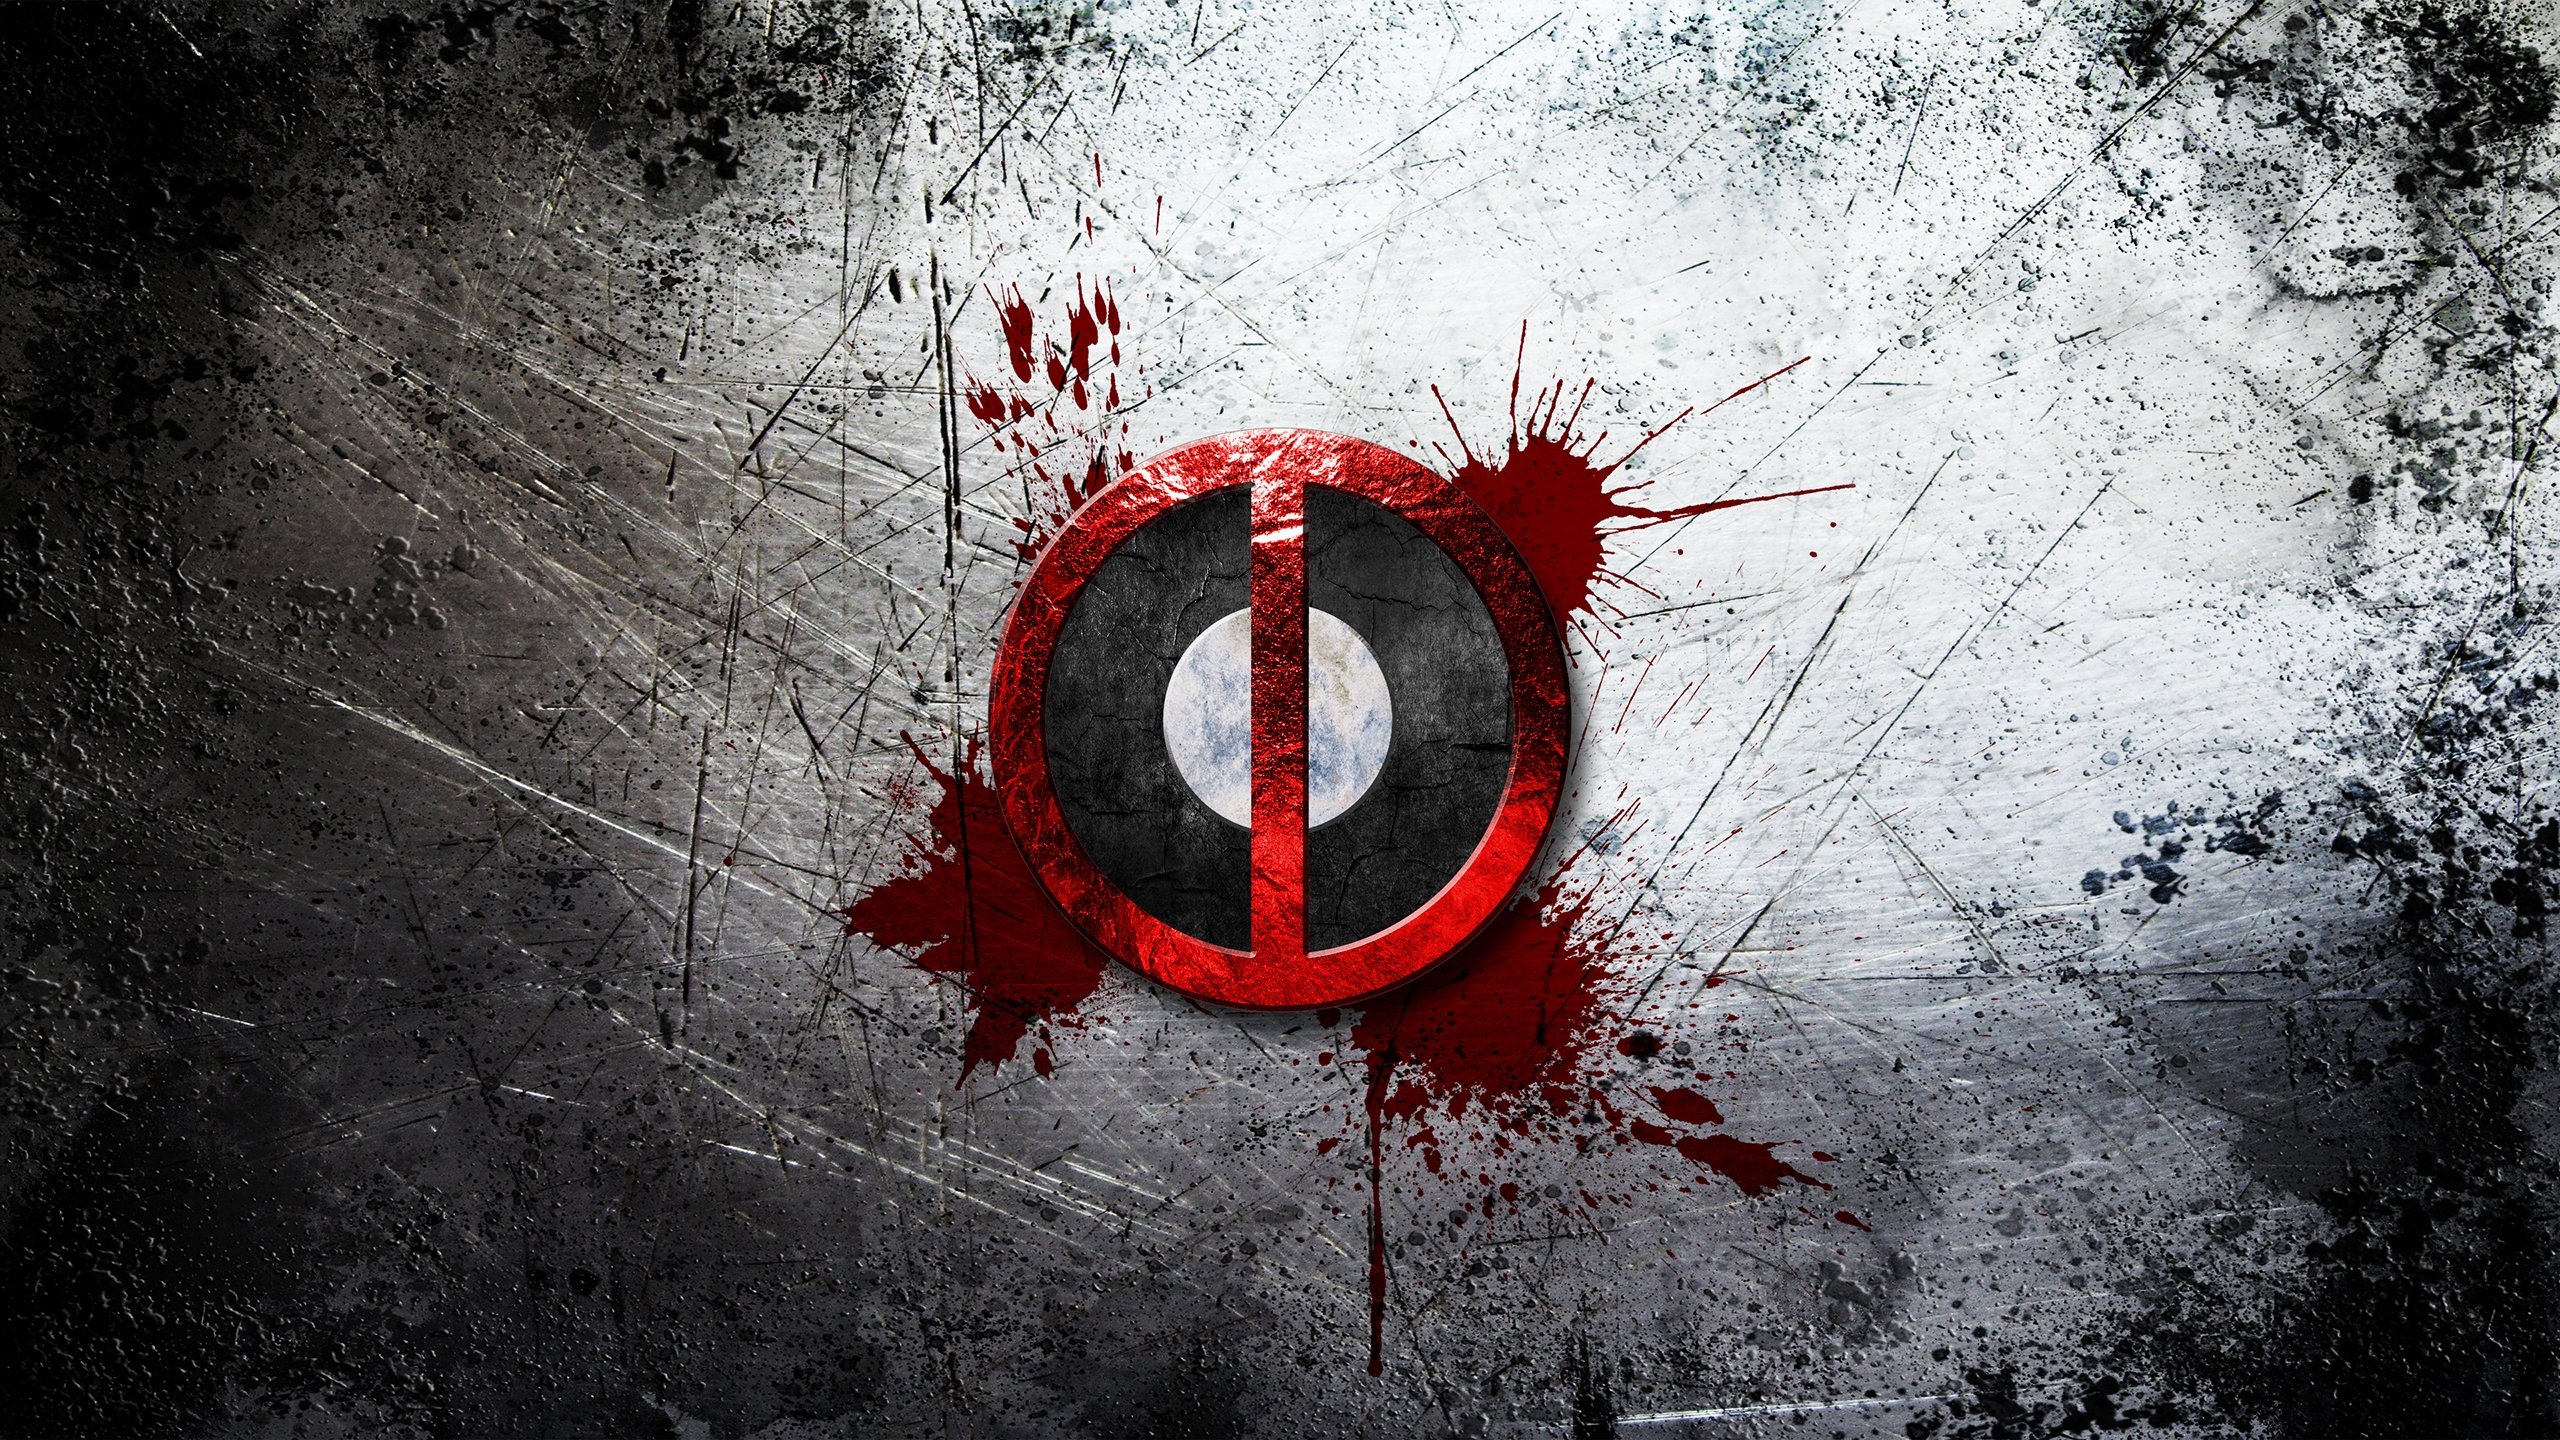 Deadpool logo wallpaper